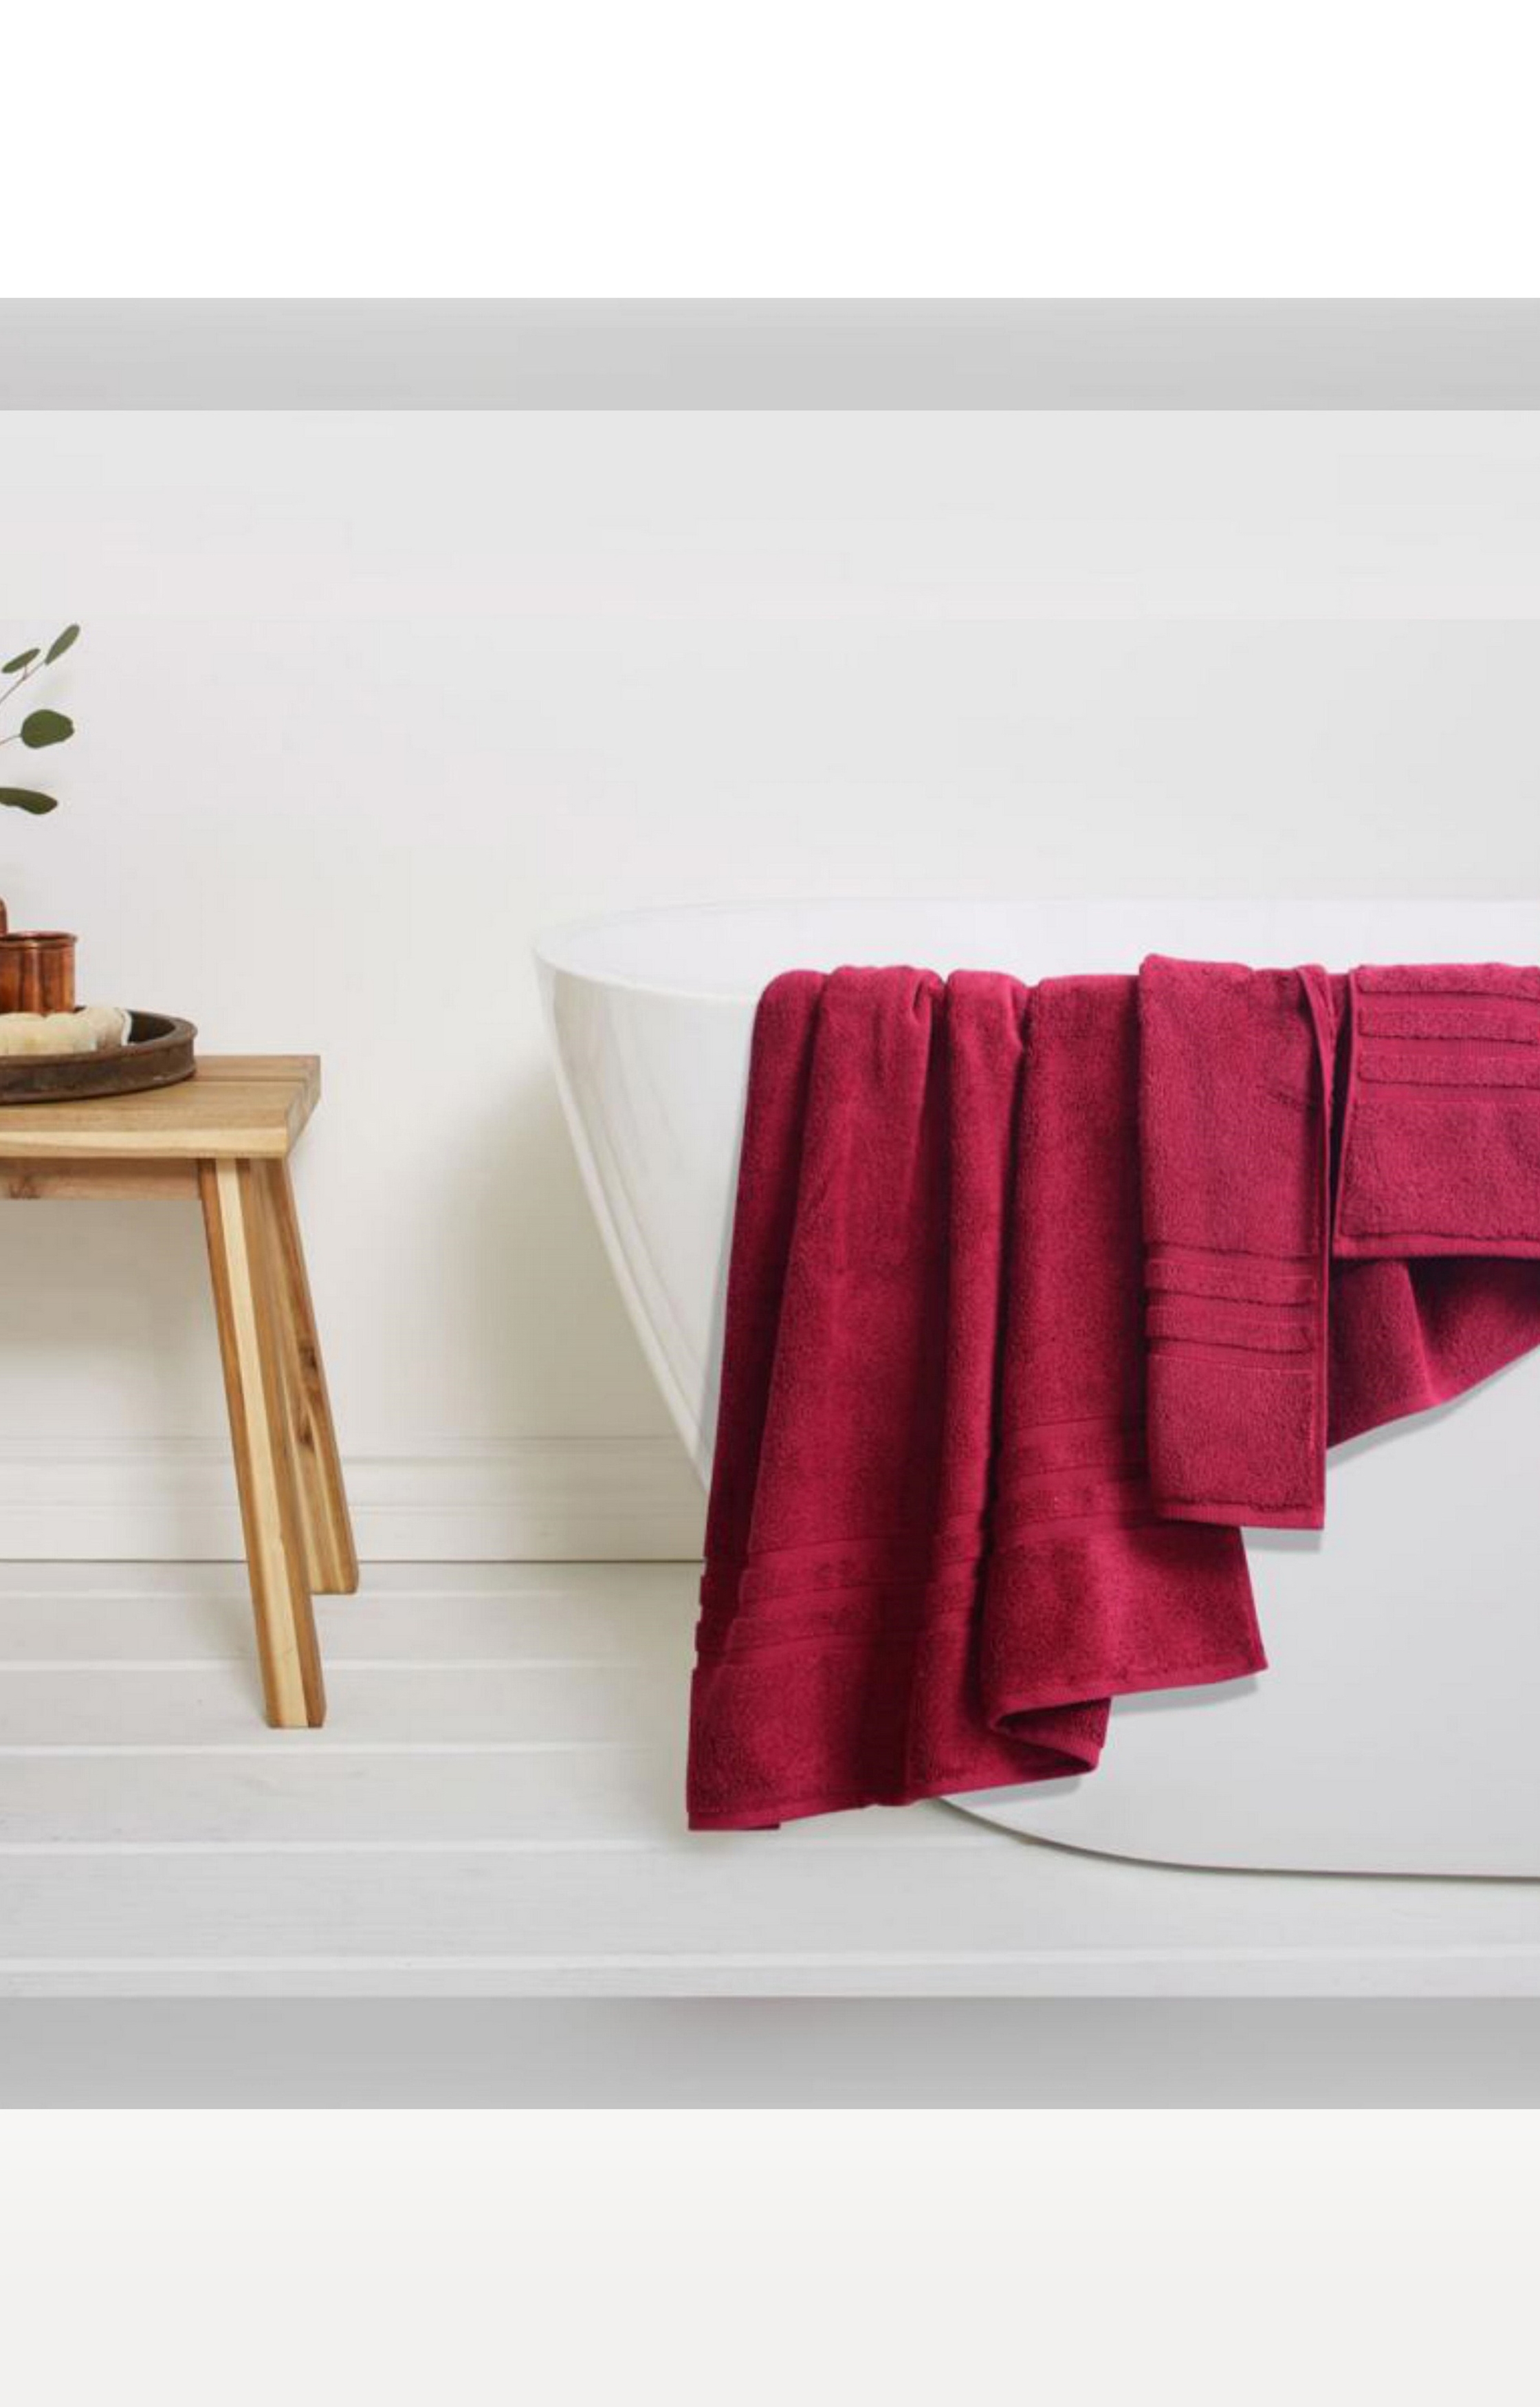 Sita Fabrics | Sita Fabrics Premium Cotton Super Soft Zero Twist Yarn Very Airy 600 GSM Bath Towel - Red - (24x48 Inch)